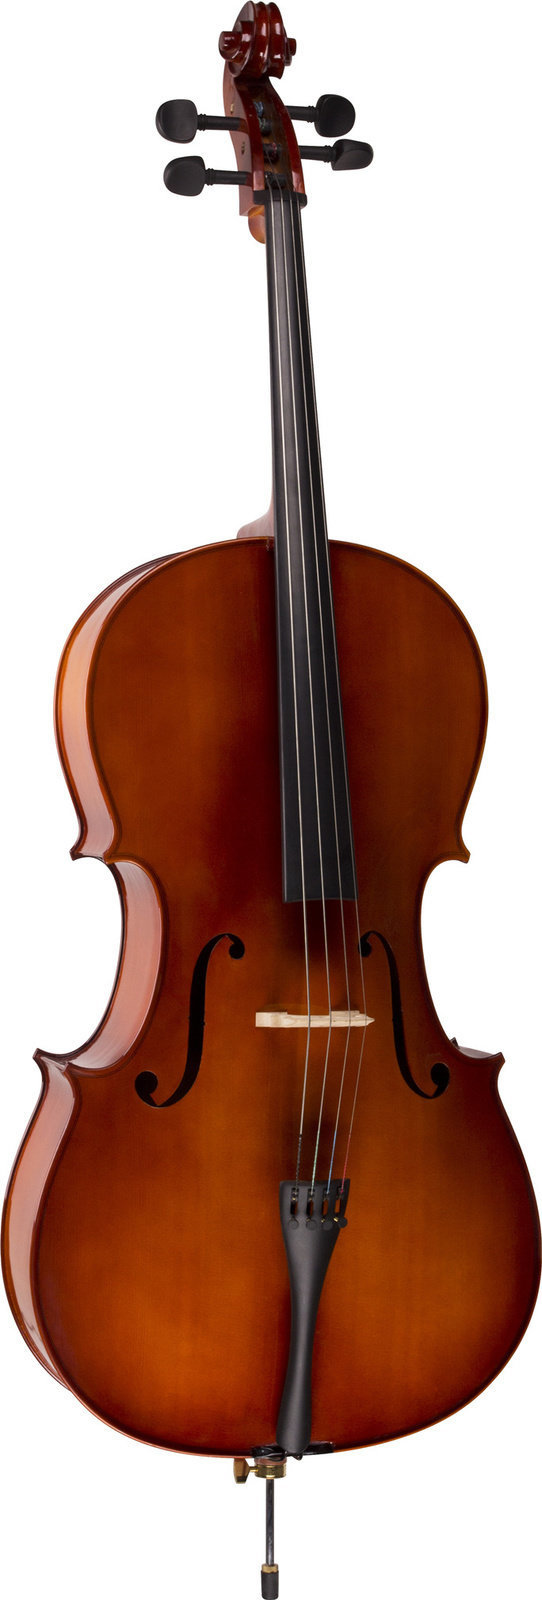 Akustisches Cello Valencia CE160G 4/4